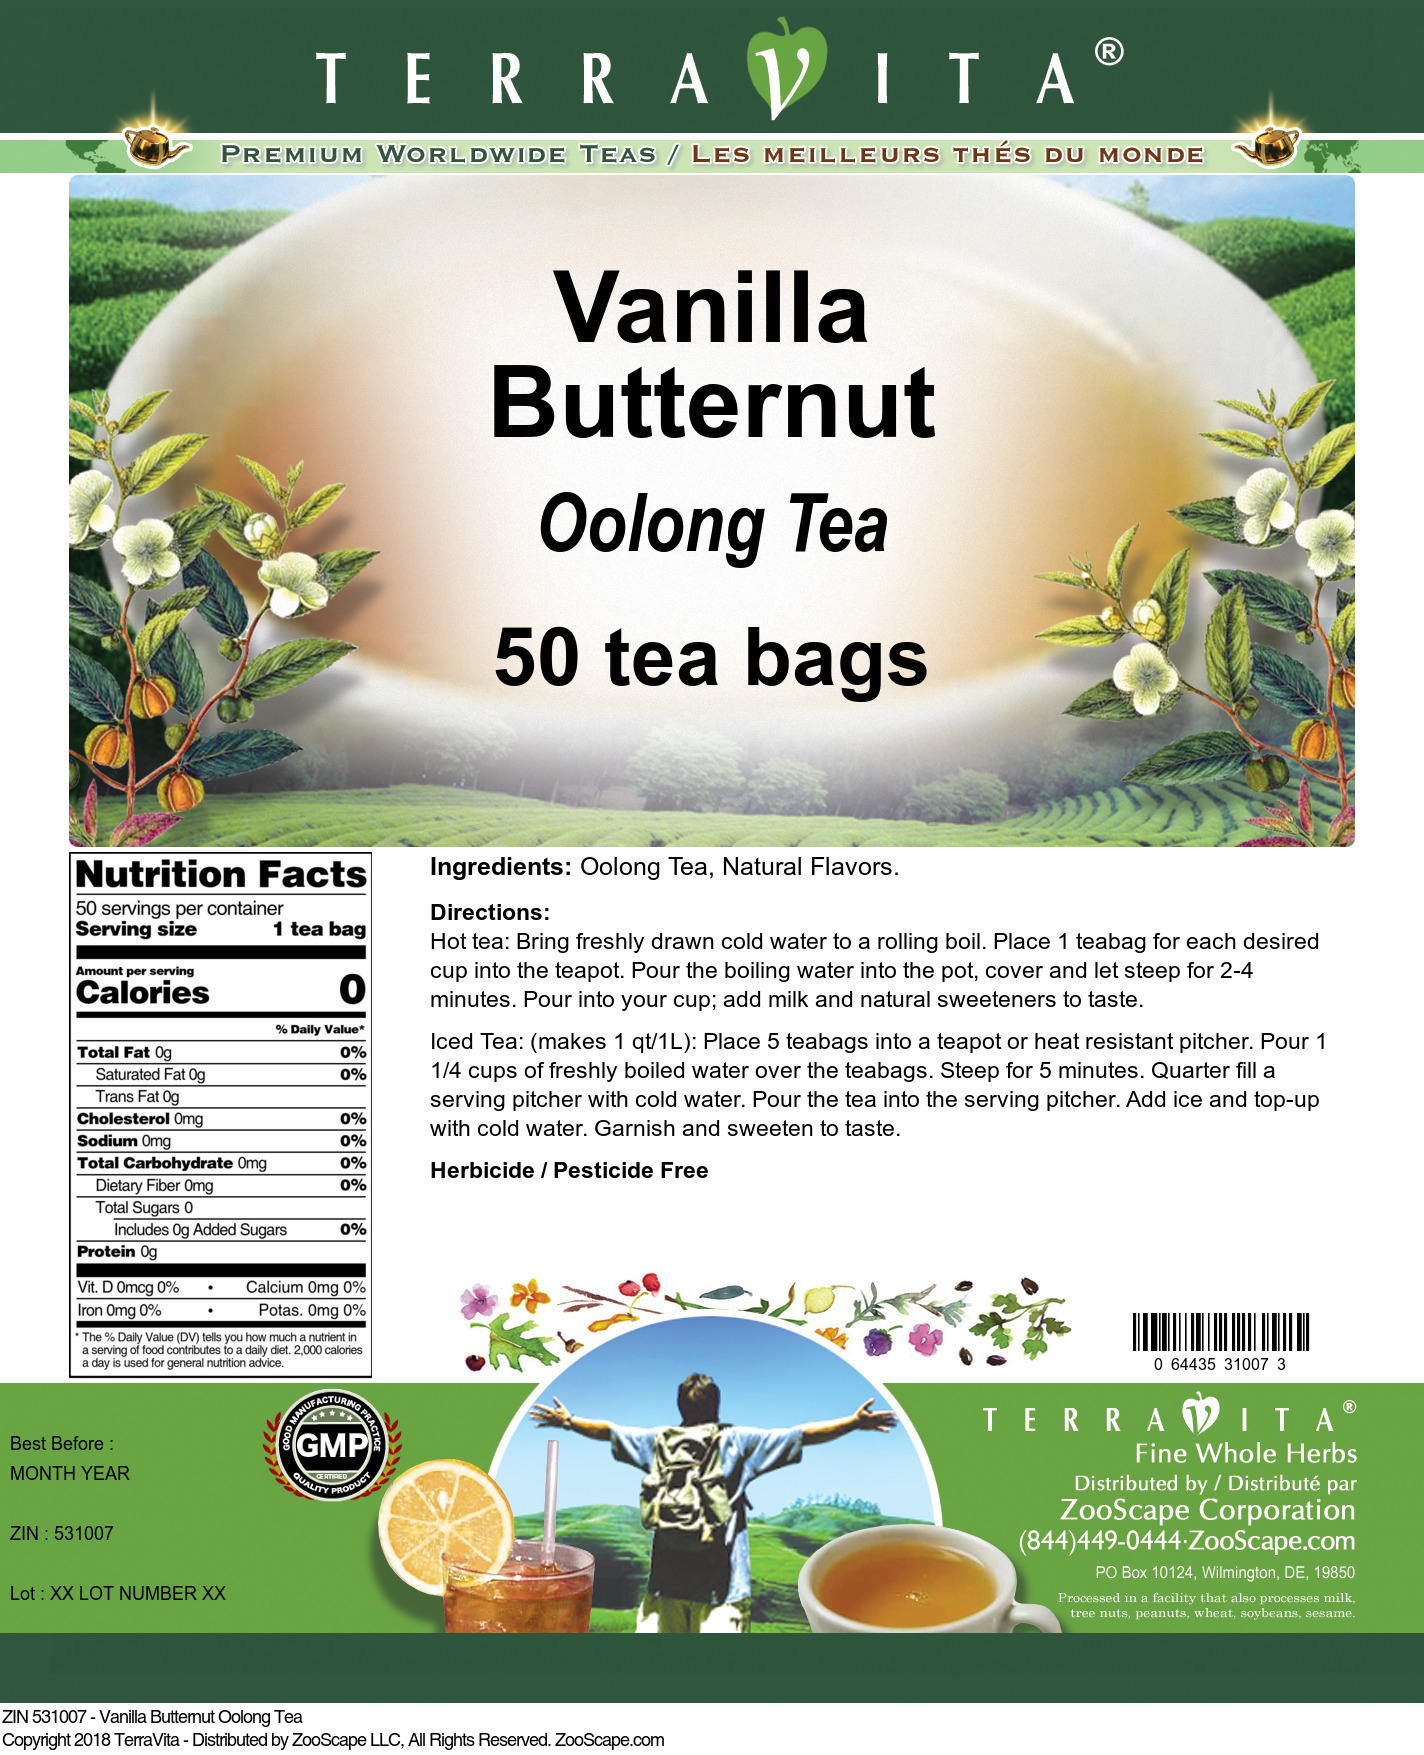 Vanilla Butternut Oolong Tea - Label